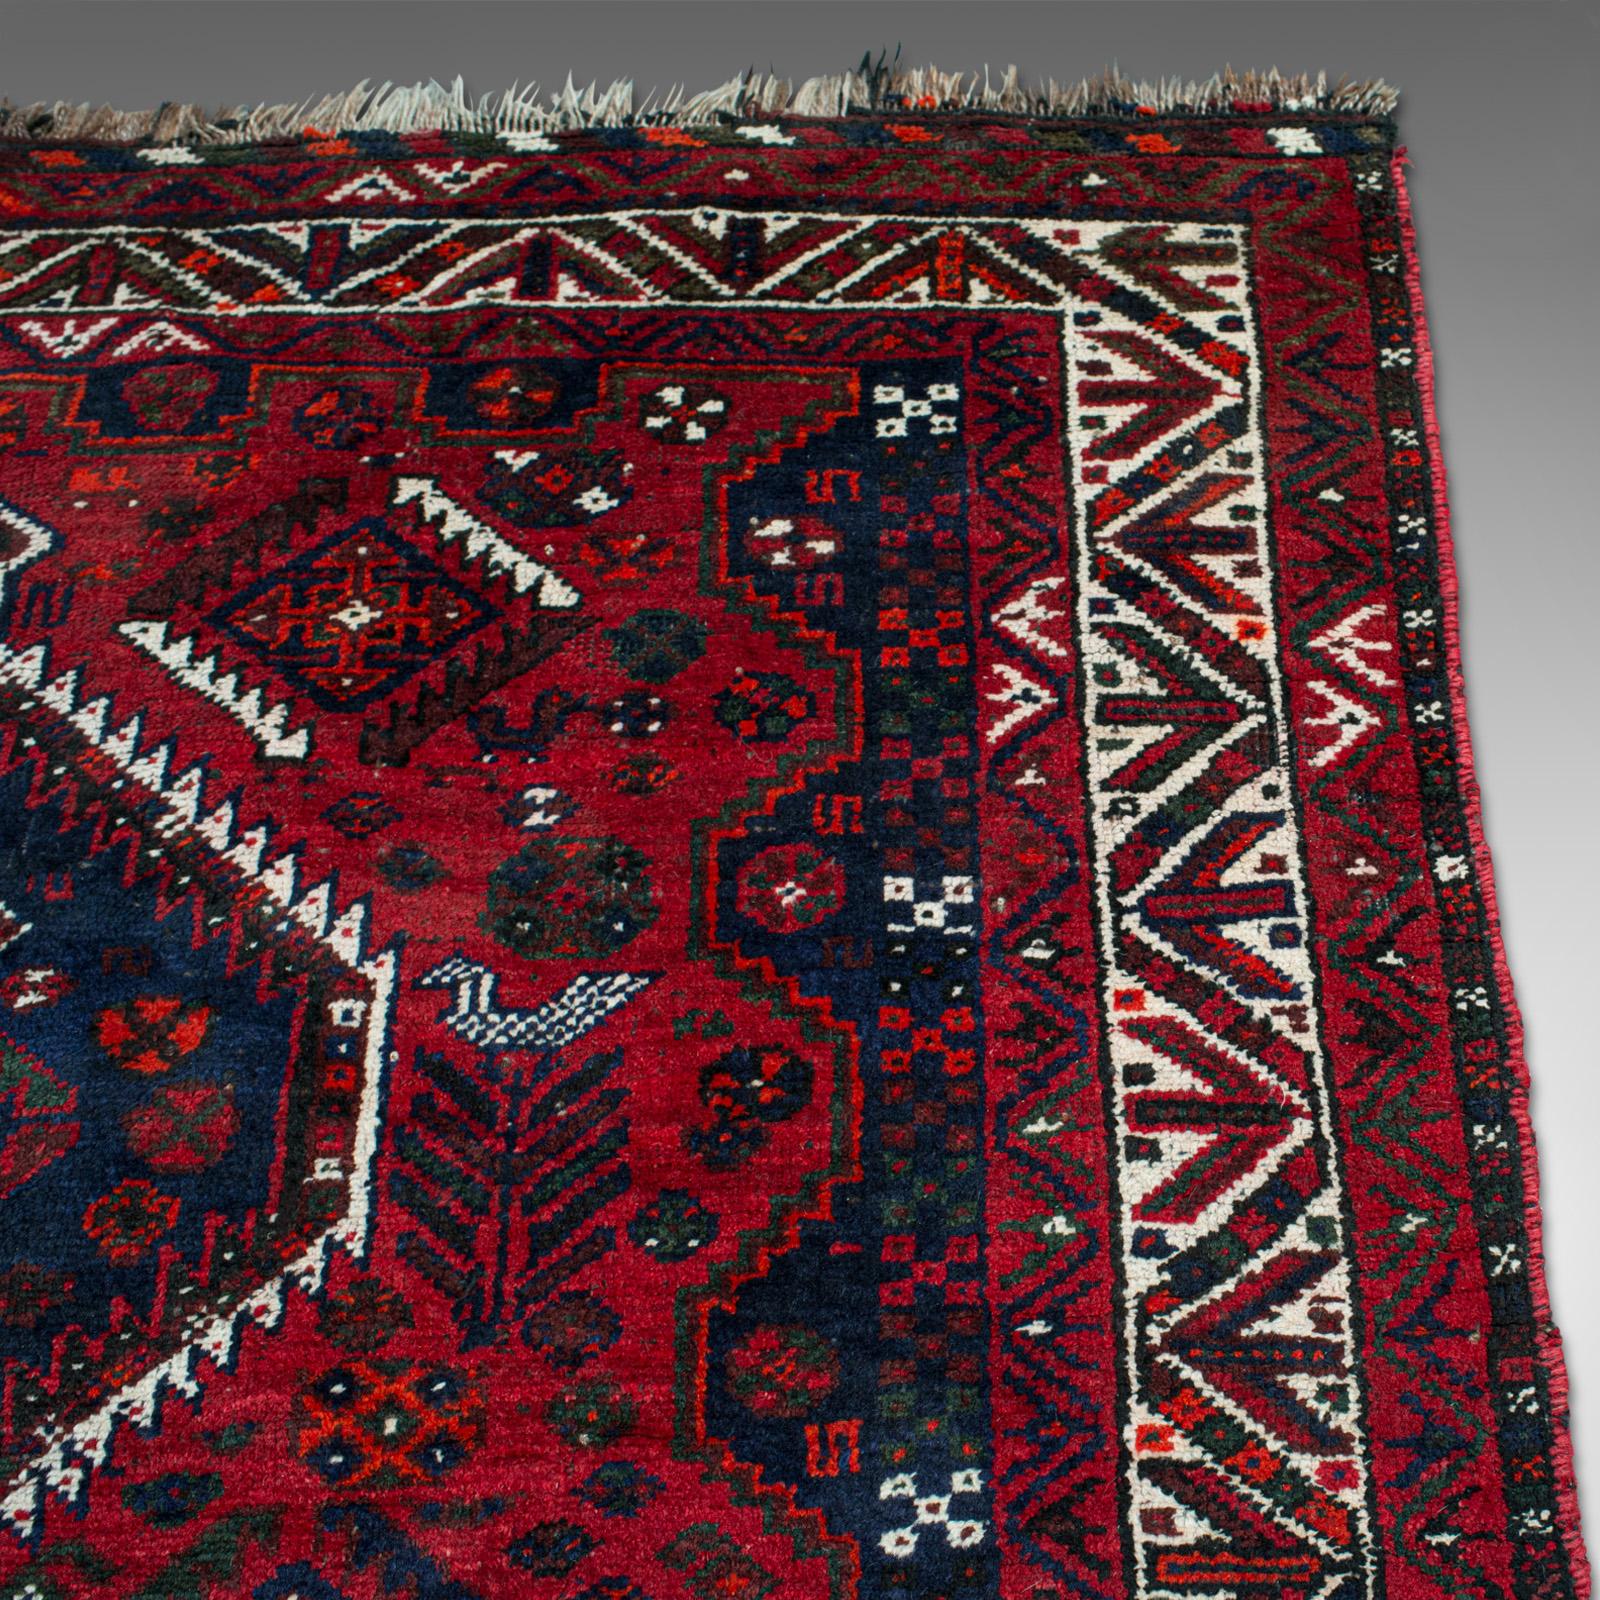 Antique Turkoman Carpet, Caucasian, Hand Woven, Lounge, Hallway, Rug, Circa 1900 For Sale 5